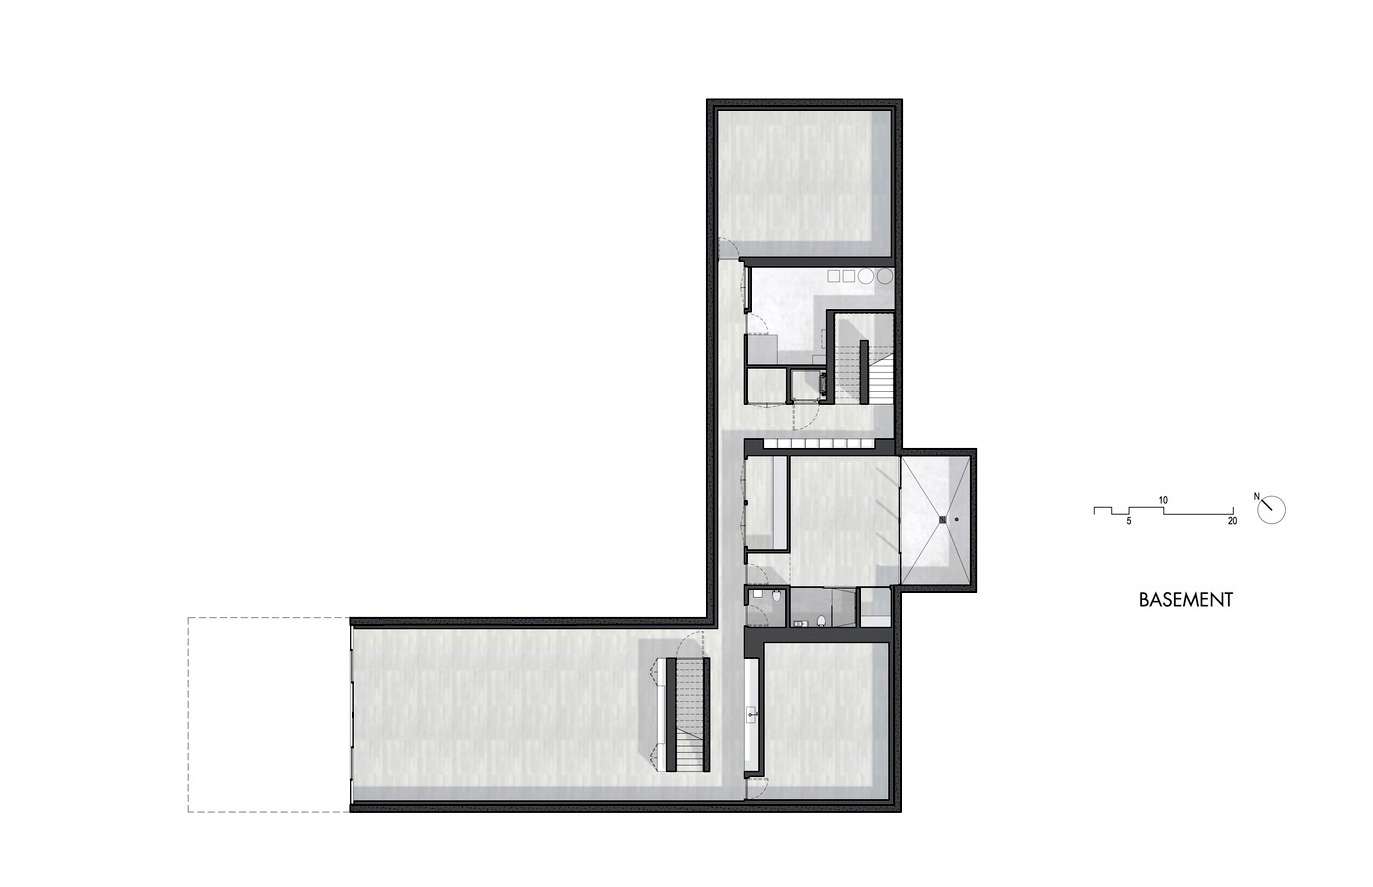 Basement Floor Plan – Oz House Luxury Residence – Ridge View Dr, Atherton, CA, USA